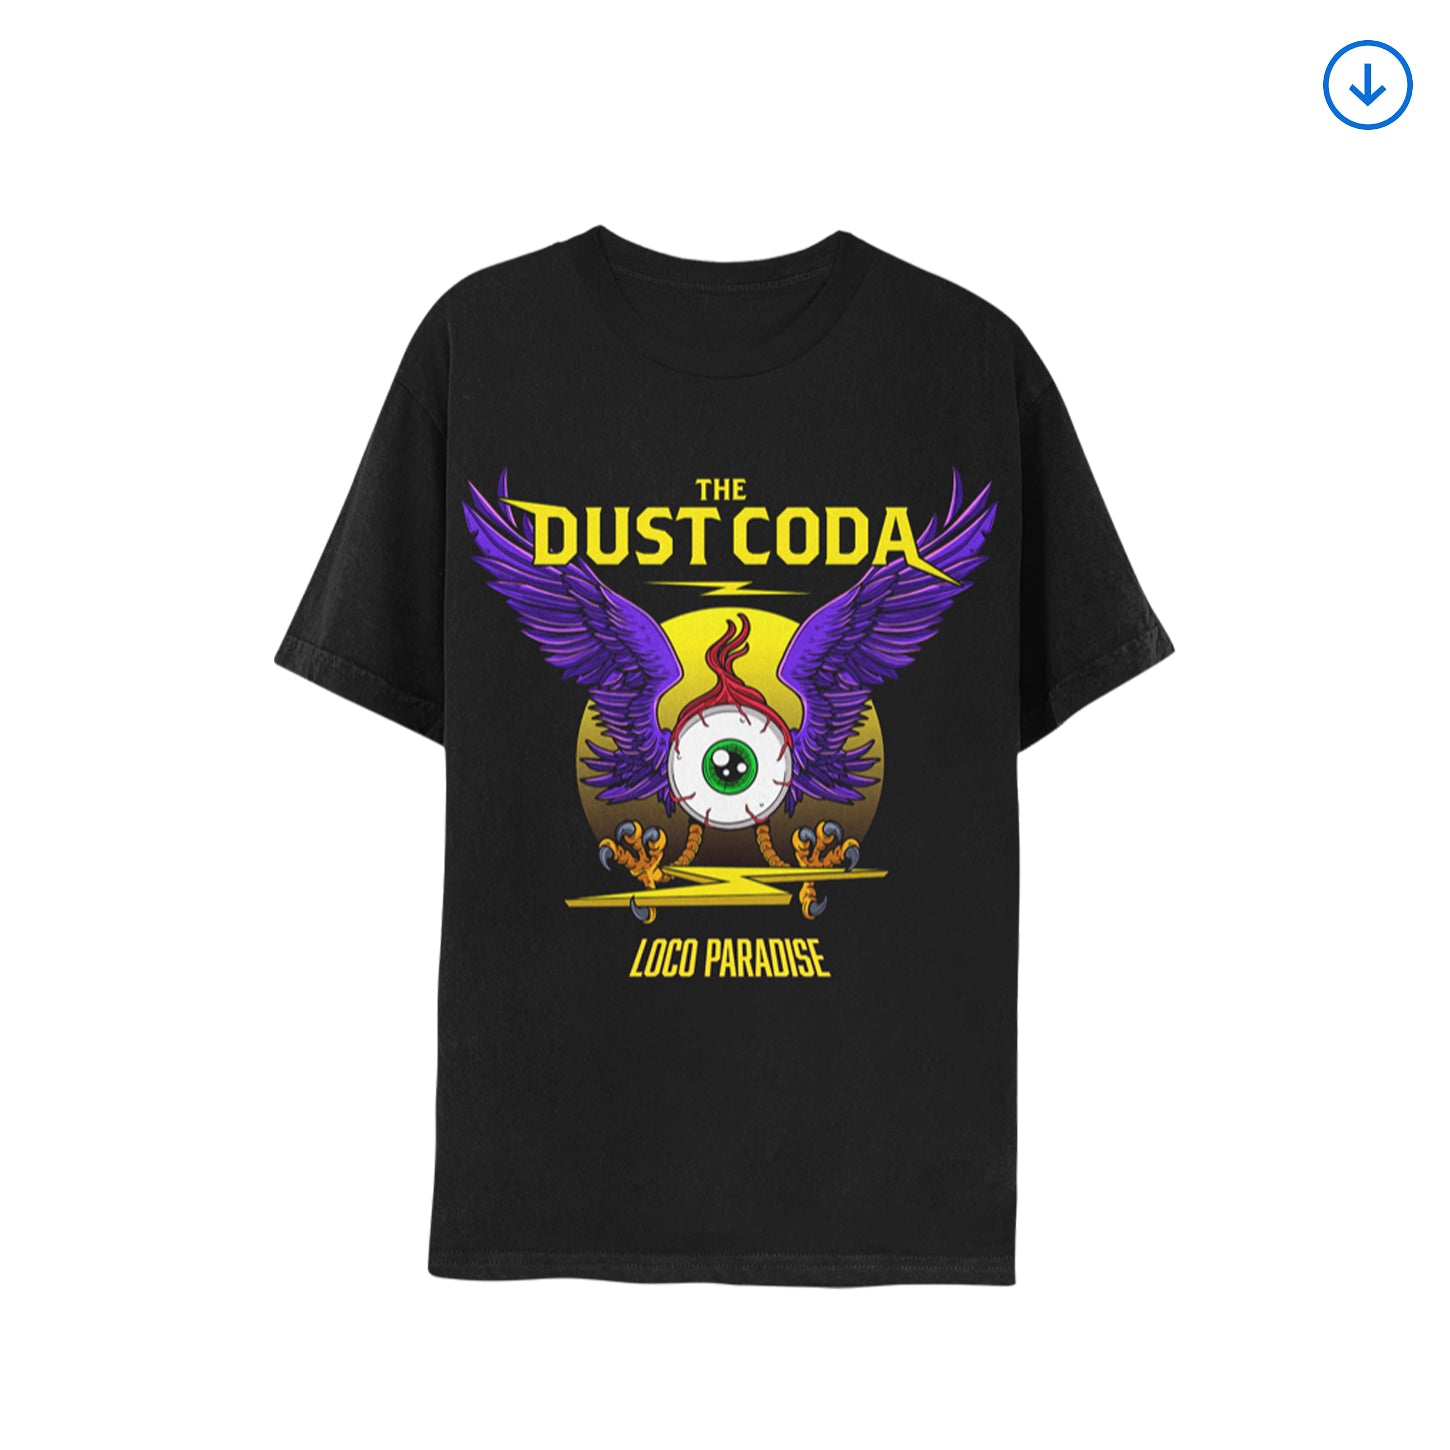 The Dust Coda "Loco Paradise" T shirt